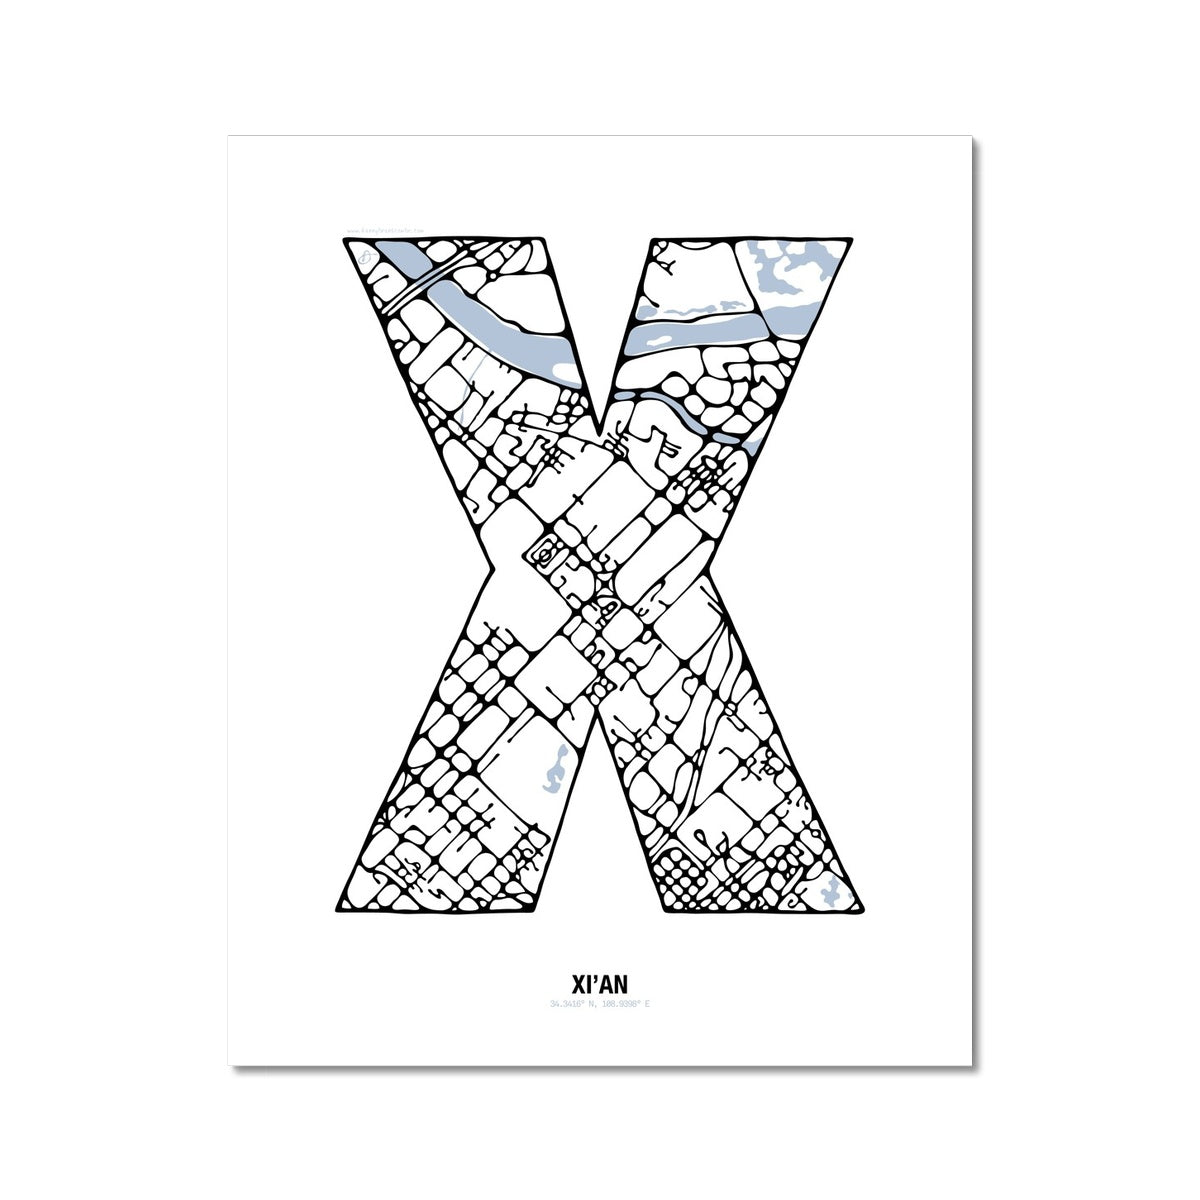 Maphabet X - Xi'an - Danny Branscombe